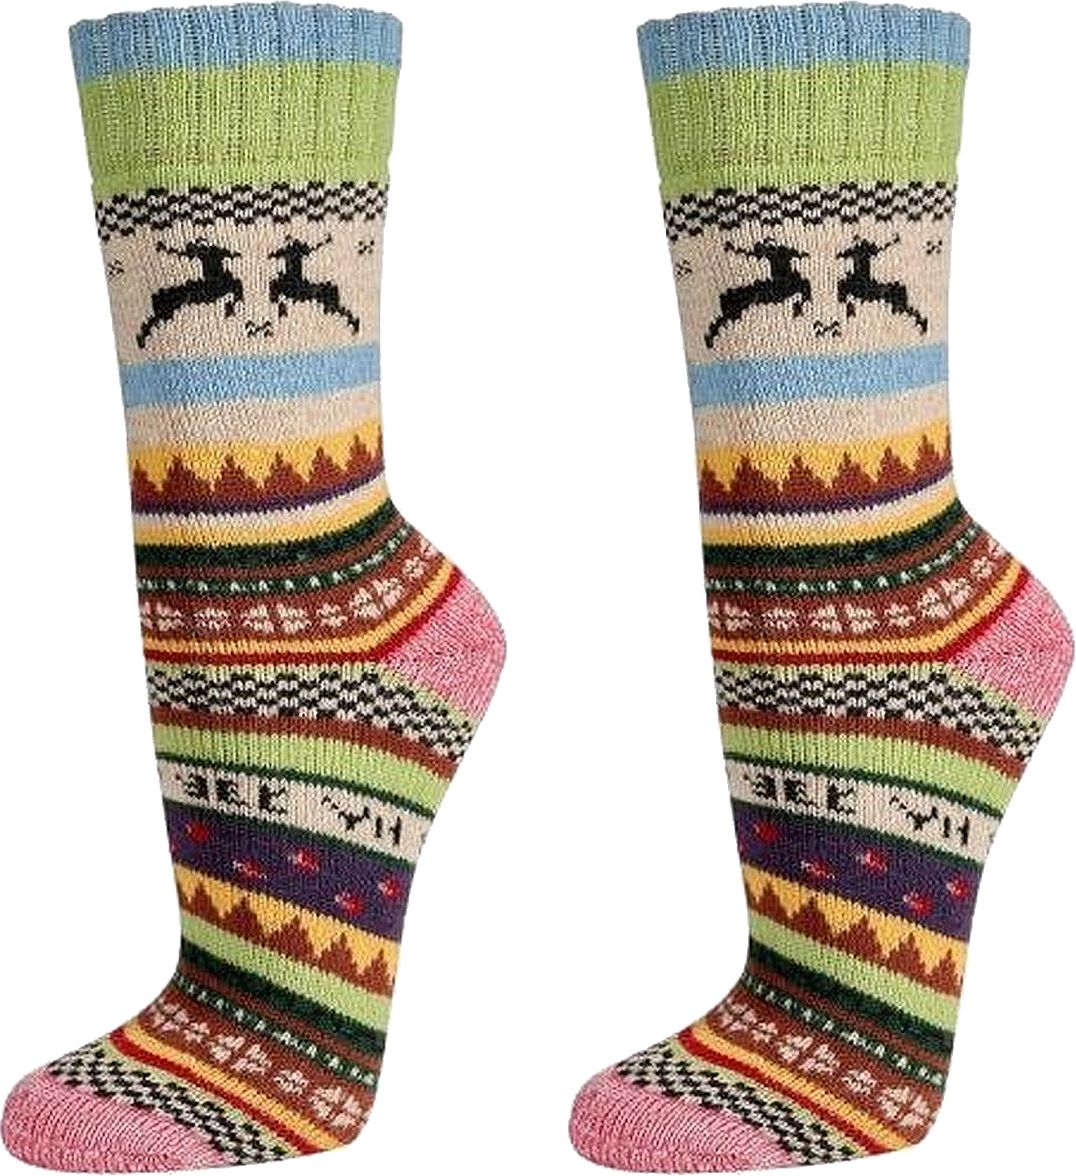 Hygge-Socken ELCH mit Wolle Skandinavien-Stil  2 Paar